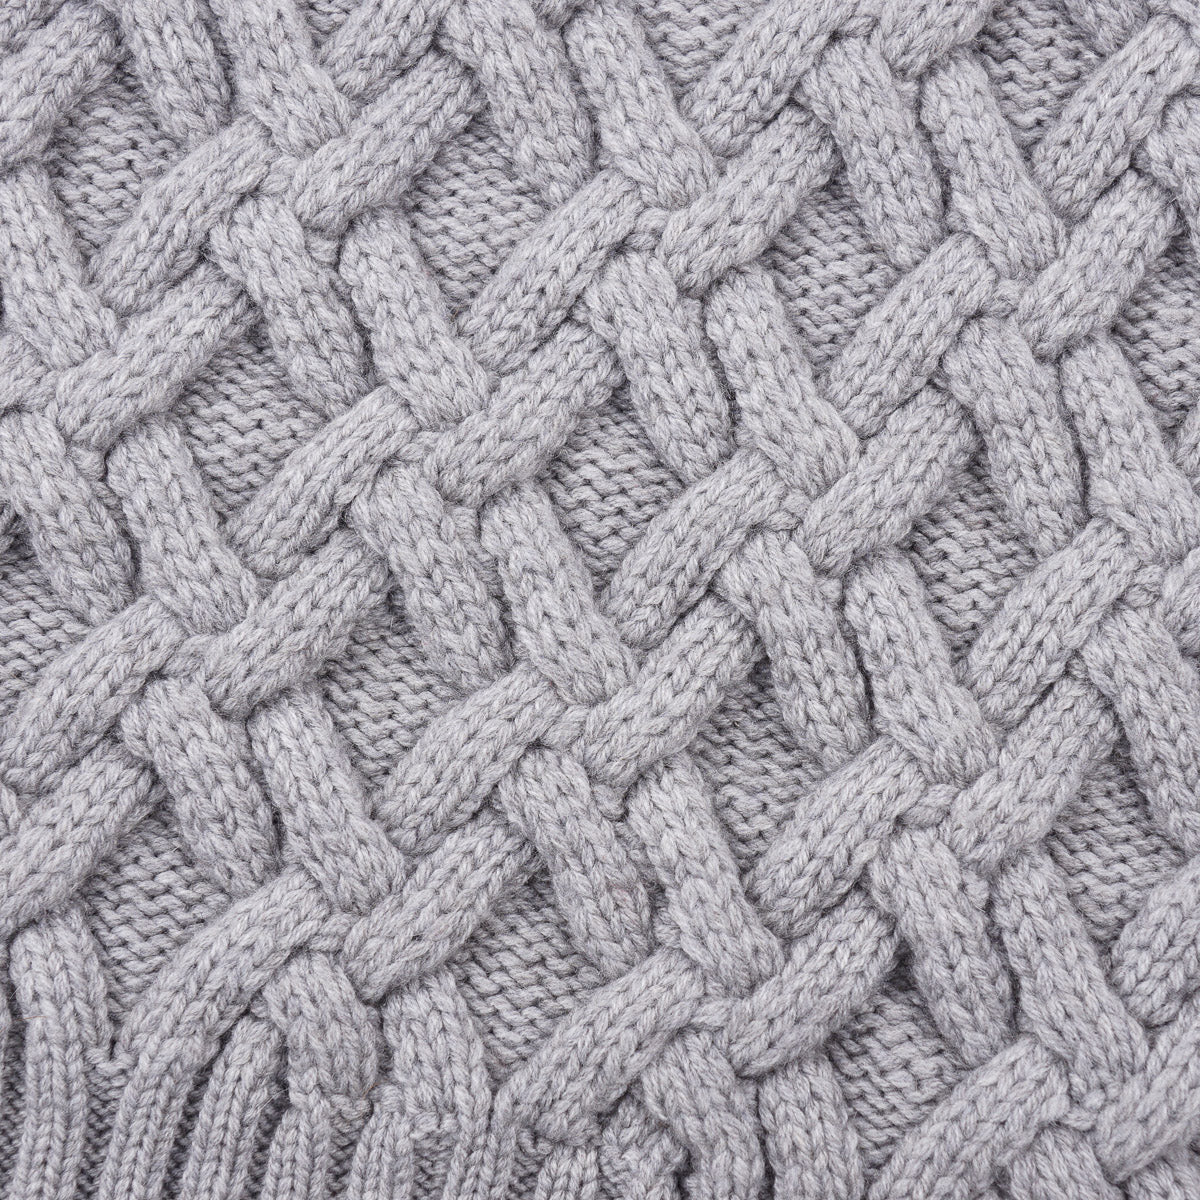 Kiton Thick Knit Cashmere Sweater - Top Shelf Apparel